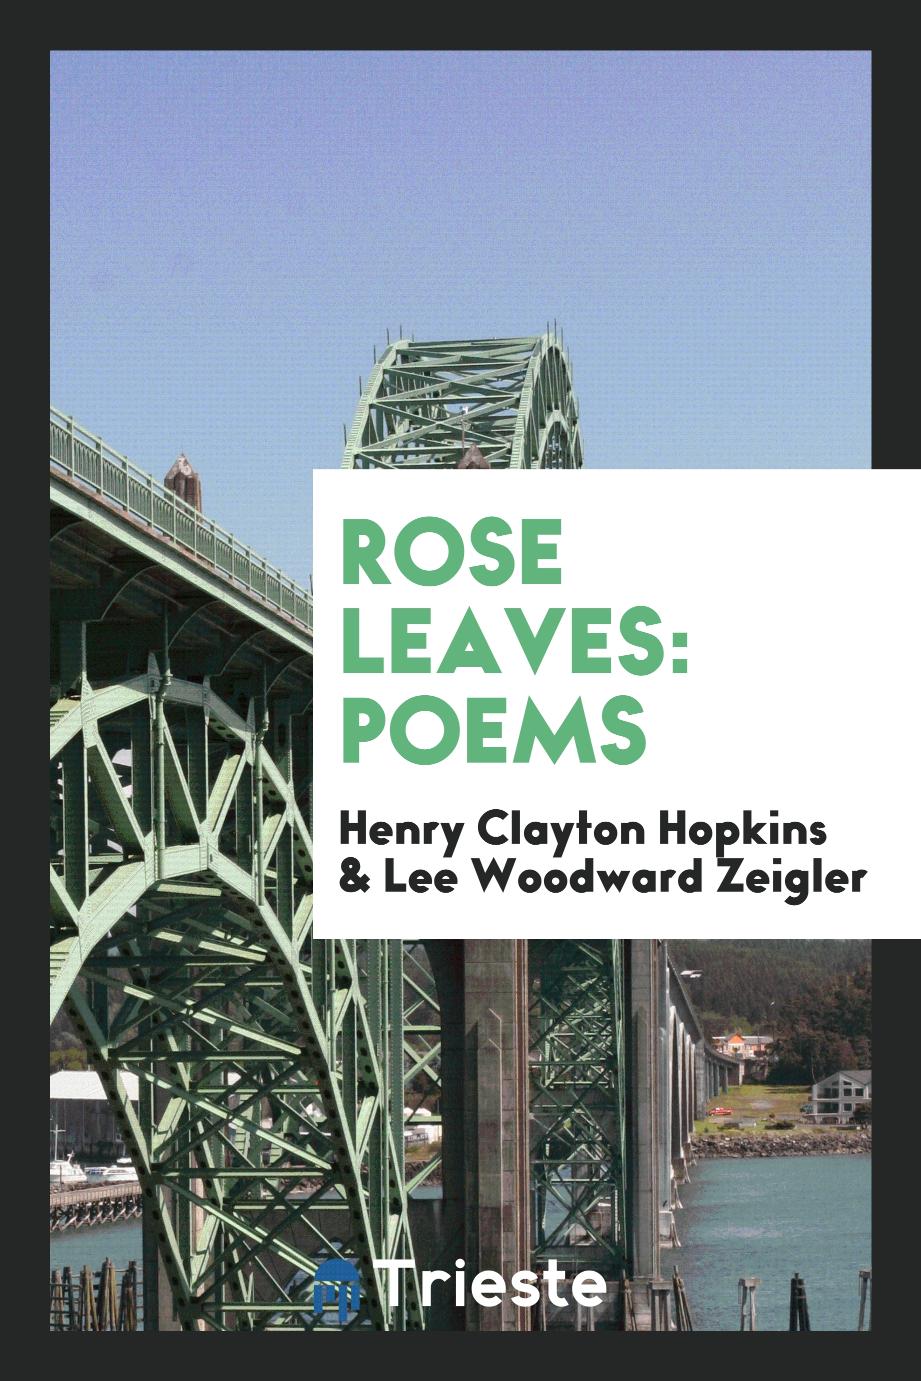 Rose leaves: poems